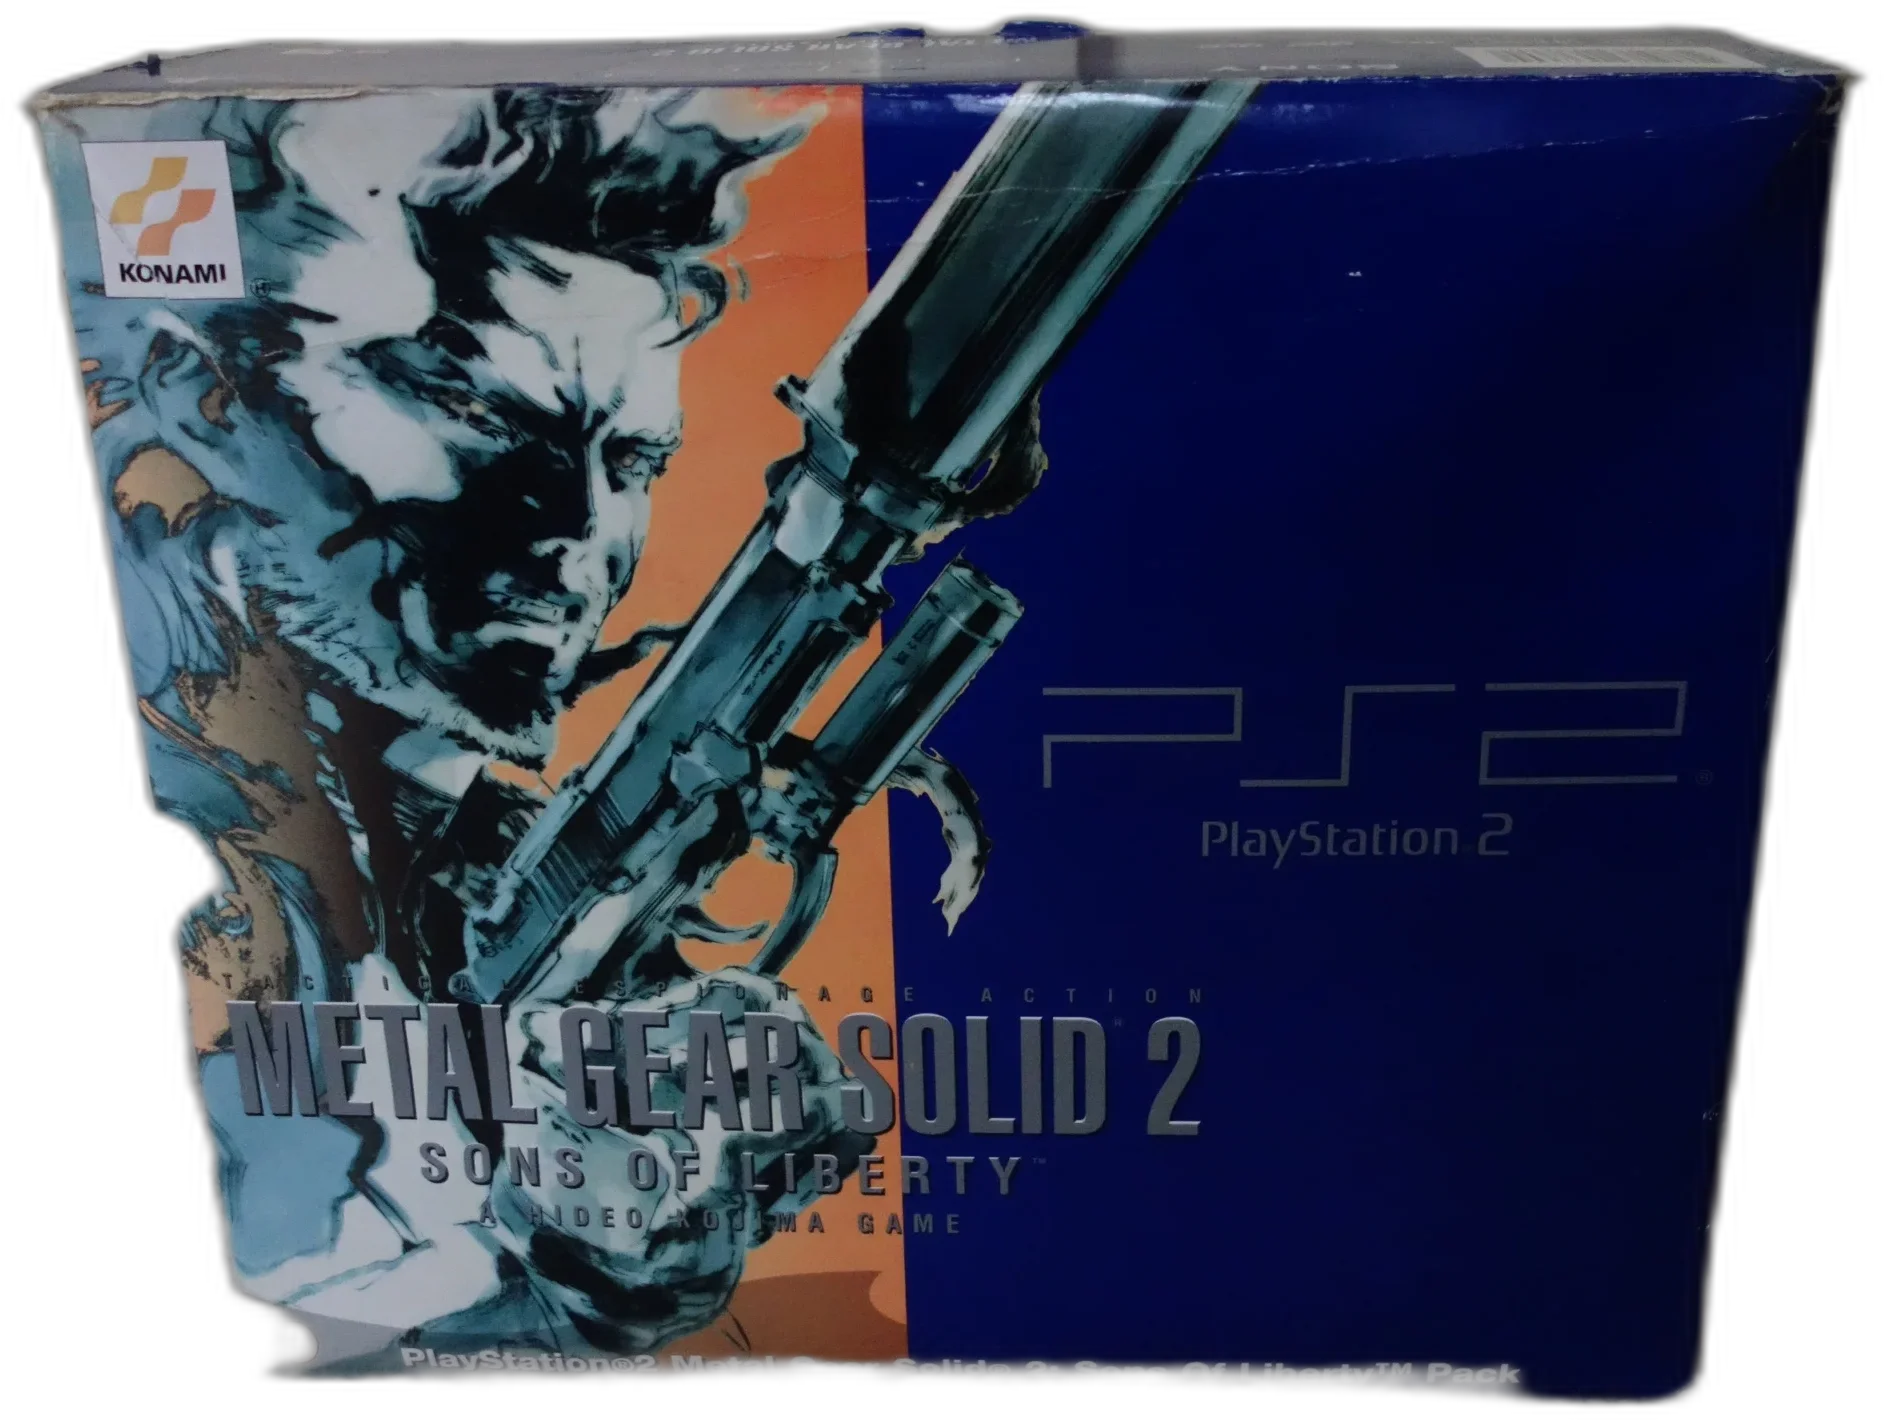  Sony PlayStation 2 Metal Gear Solid 2 Bundle